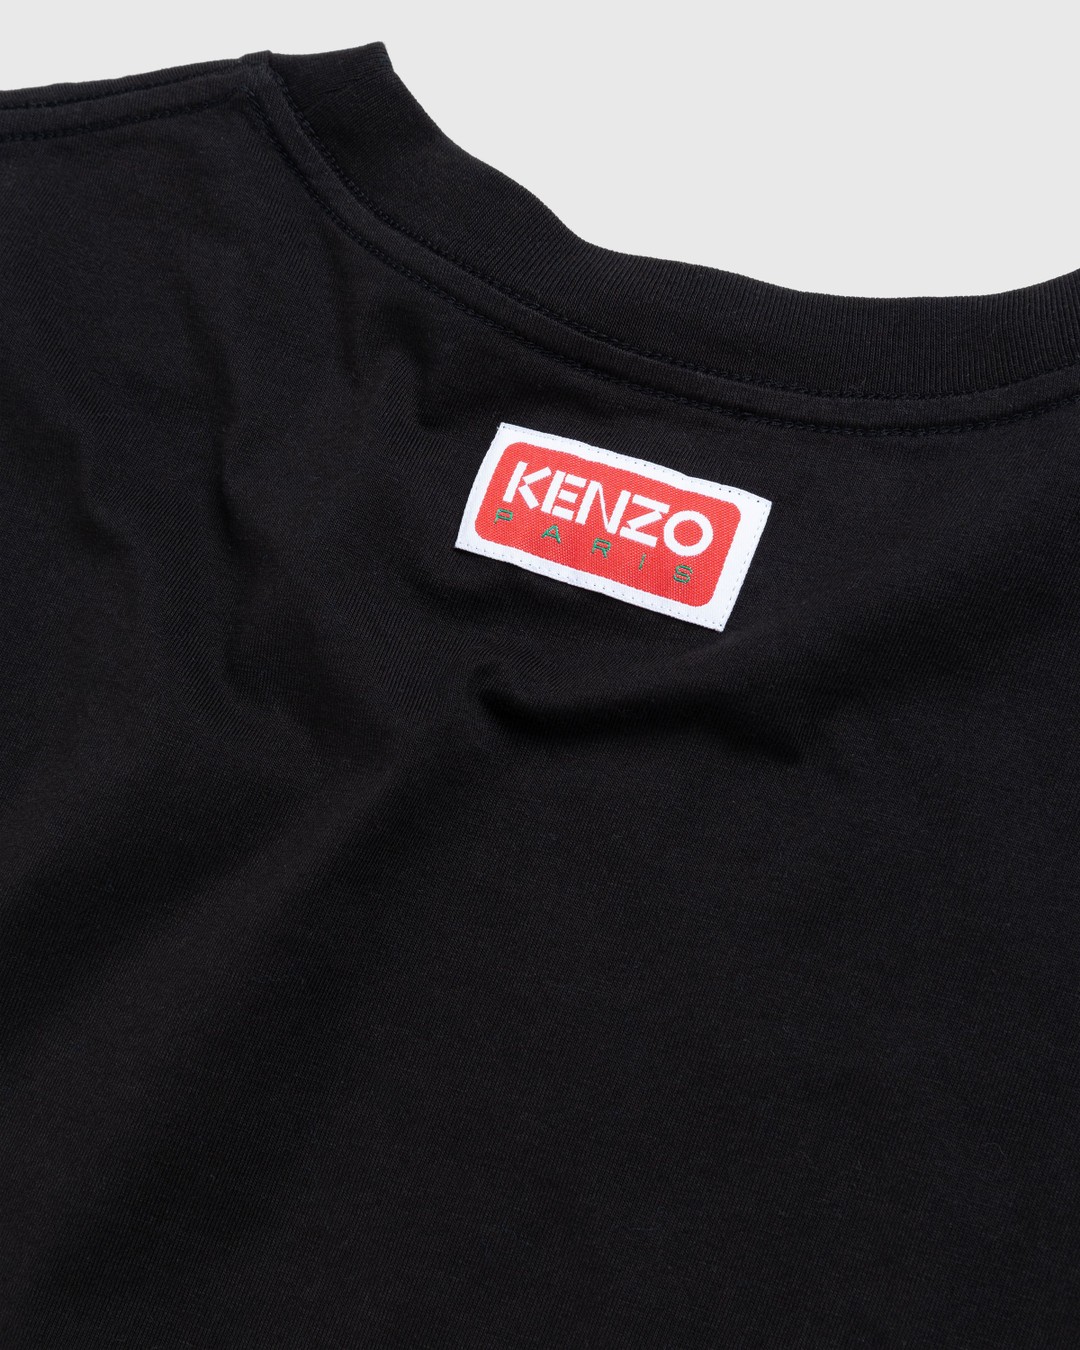 Kenzo – Boke Flower T-Shirt Black - T-shirts - Black - Image 6